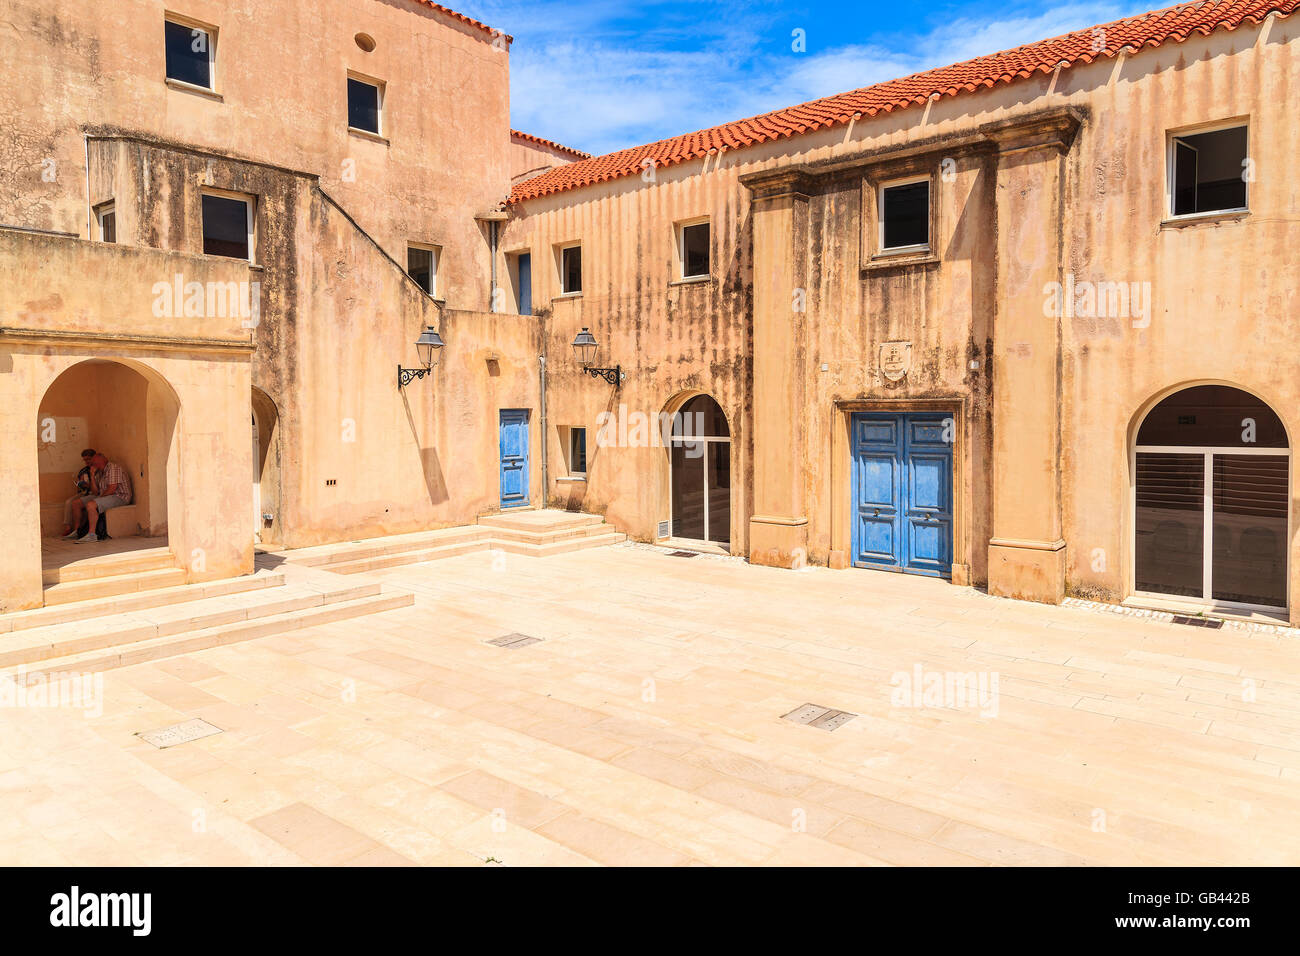 Stadt BONIFACIO, Korsika - 23. Juni 2015: Altstädter Ring mit Häusern in der Stadt Bonifacio, beliebtes Touristenziel auf ADR Stockfoto